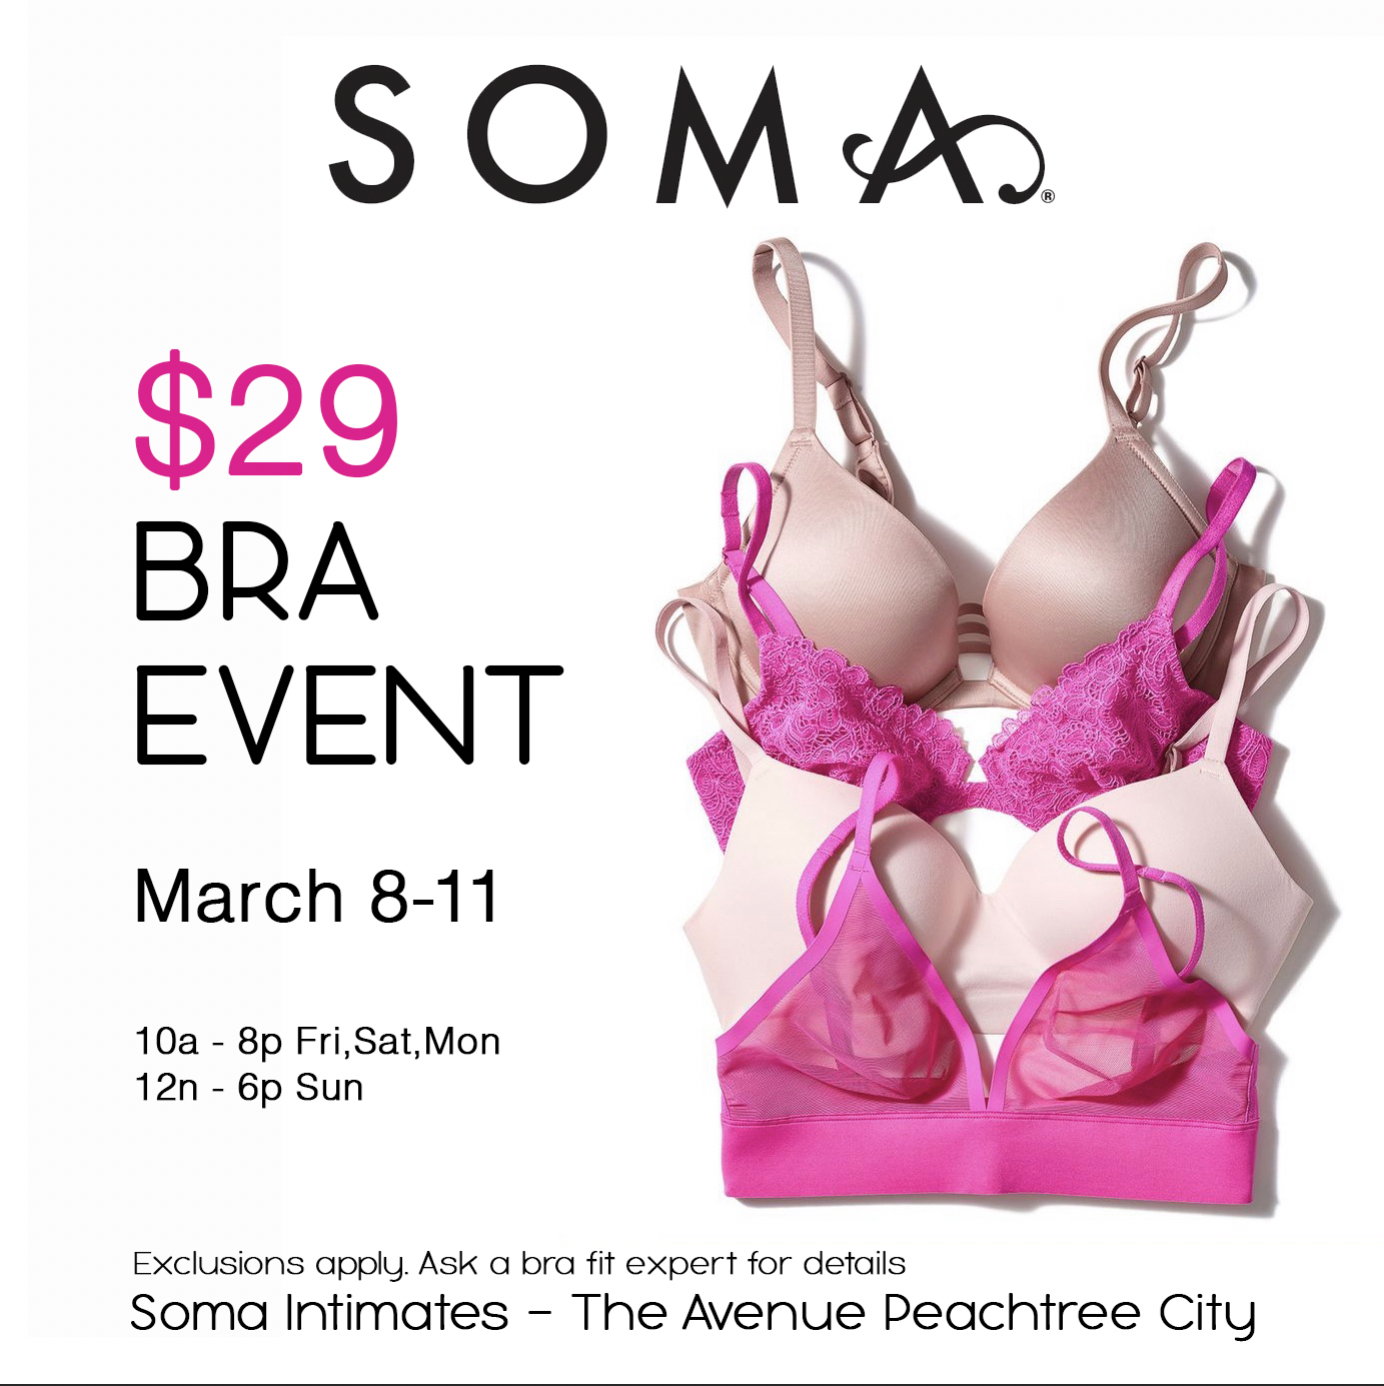 SOMA $29 BRA EVENT  The Avenue Peachtree City